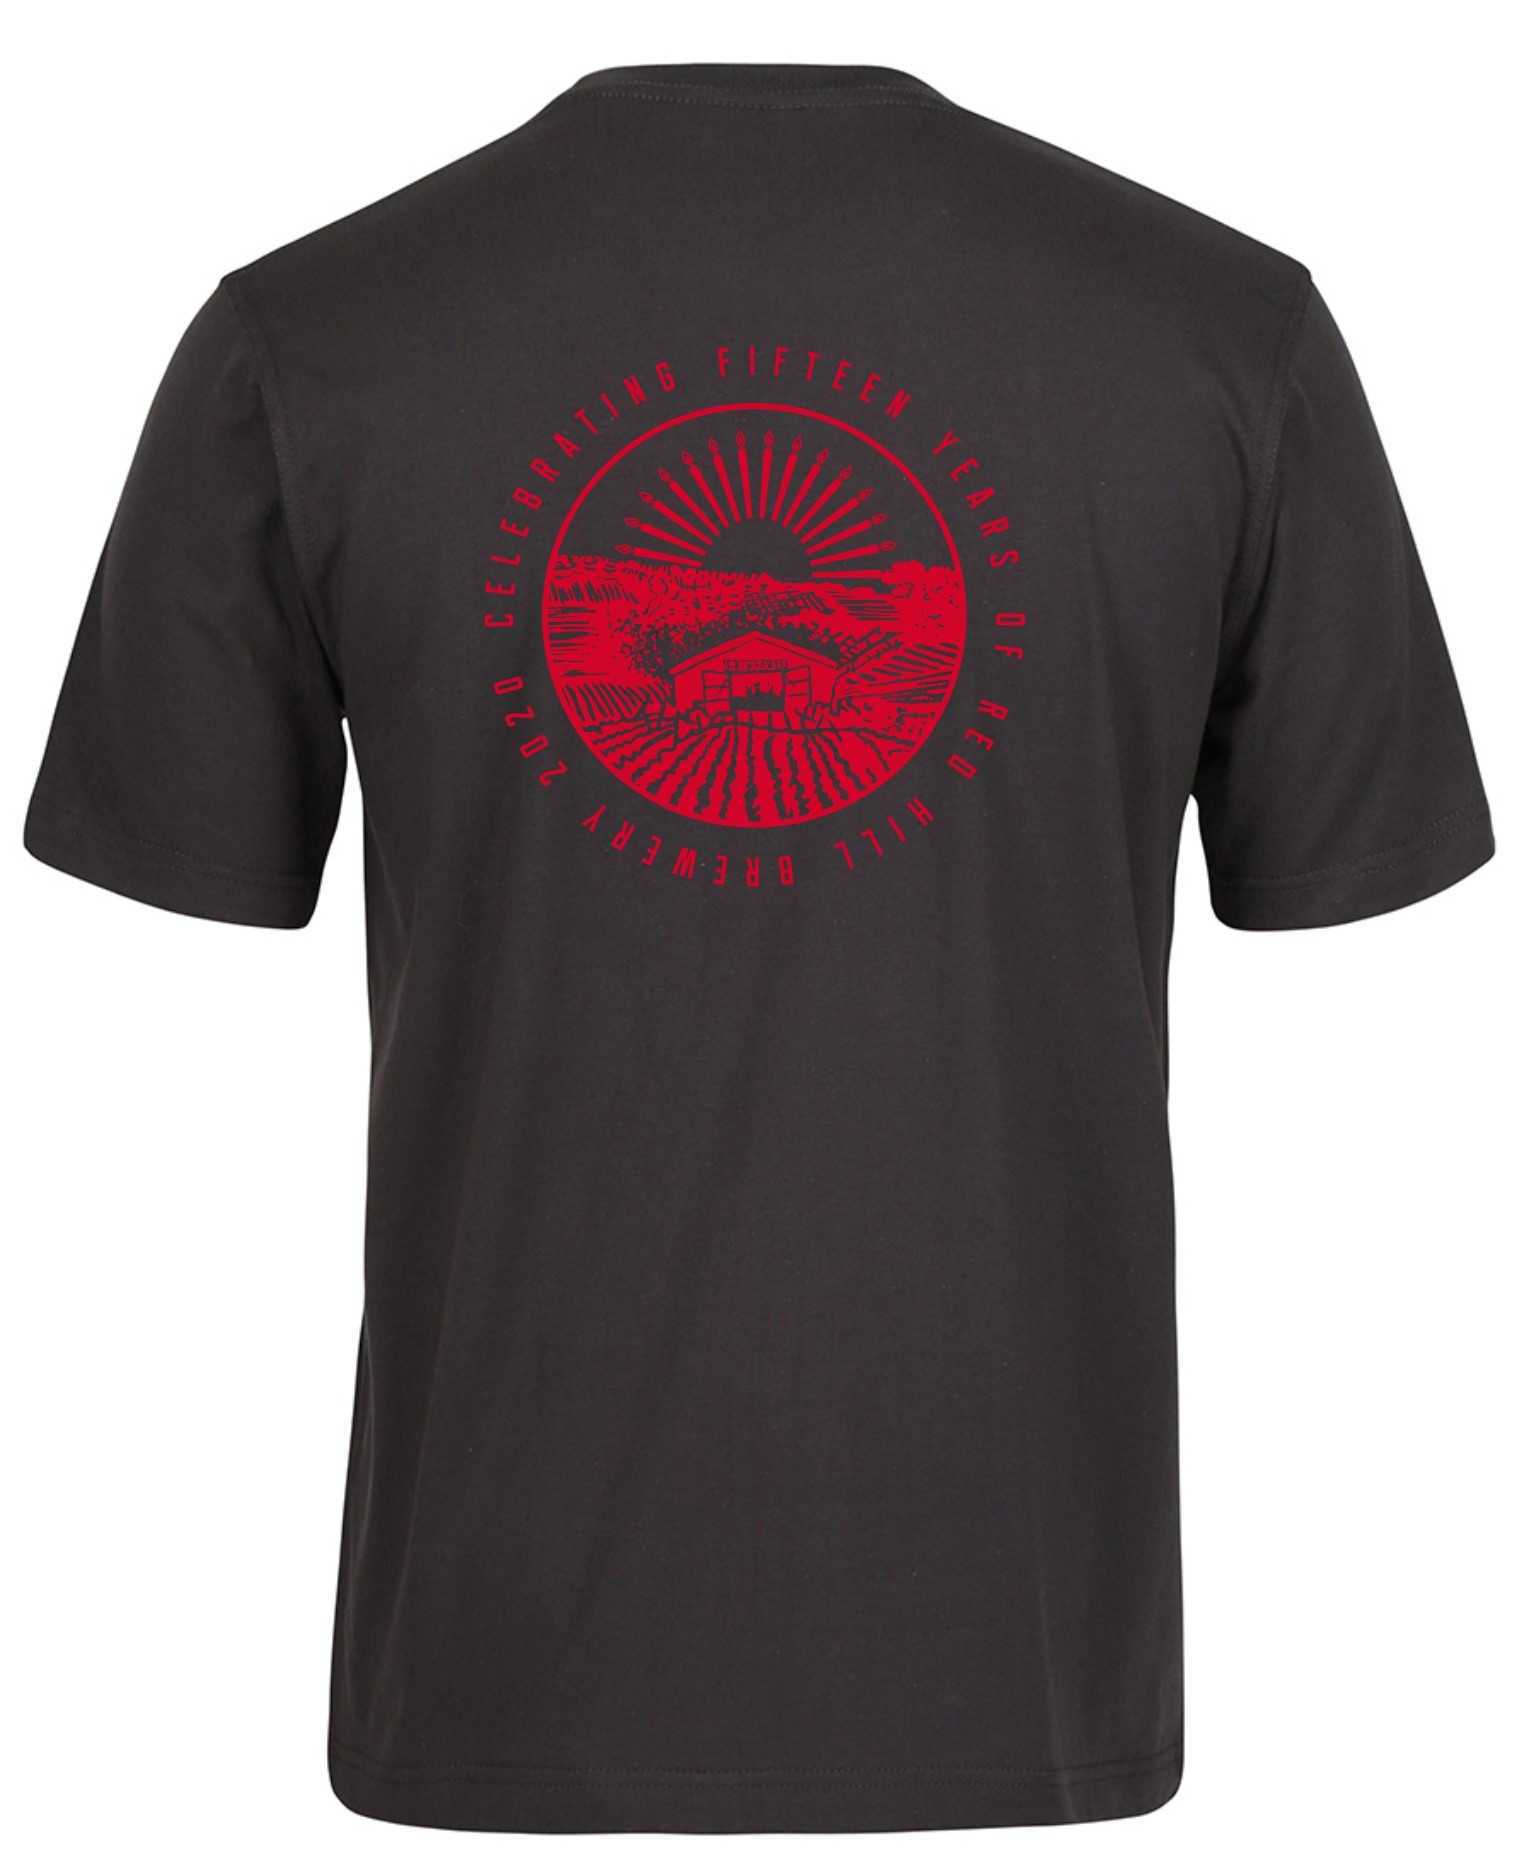 15th Birthday T-Shirt - Red Hill Brewery | Mornington Peninsula's ...